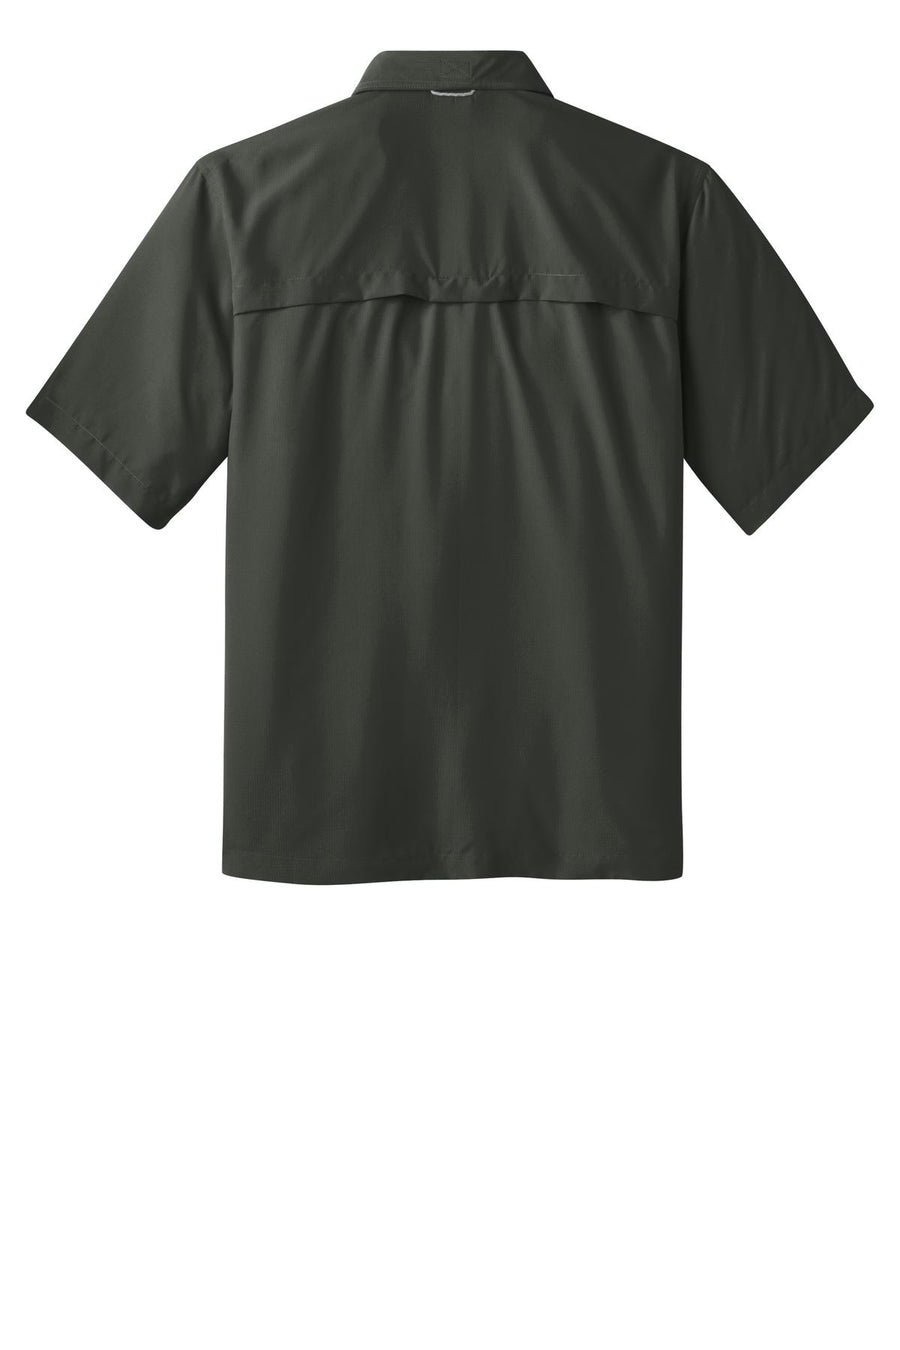 Eddie Bauer EB600 Long Sleeve Performance Fishing Shirt - Boulder - S